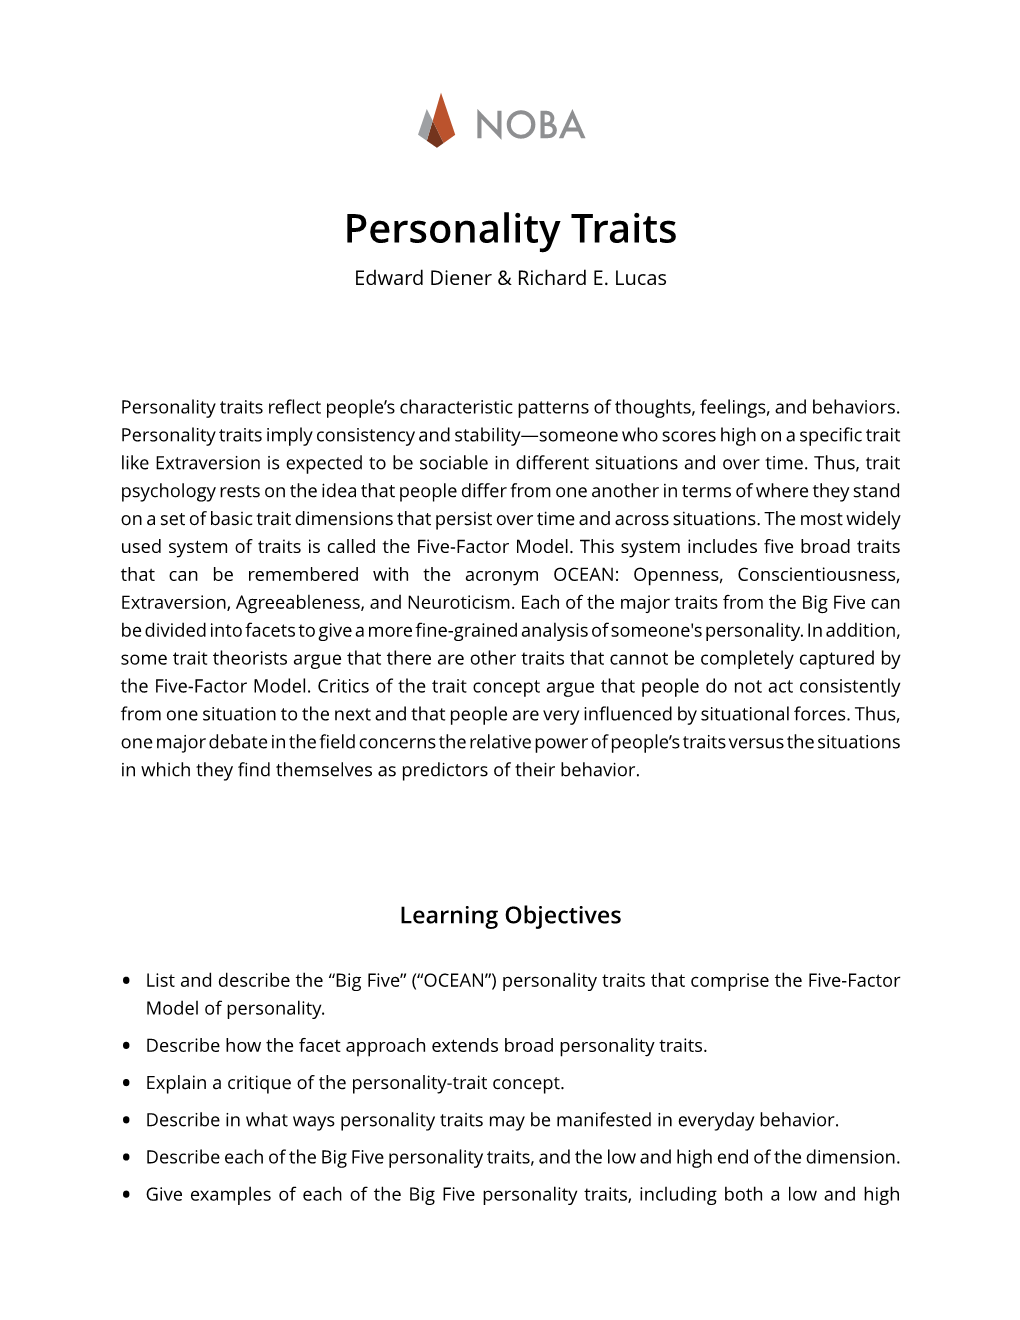 NOBA Personality Traits